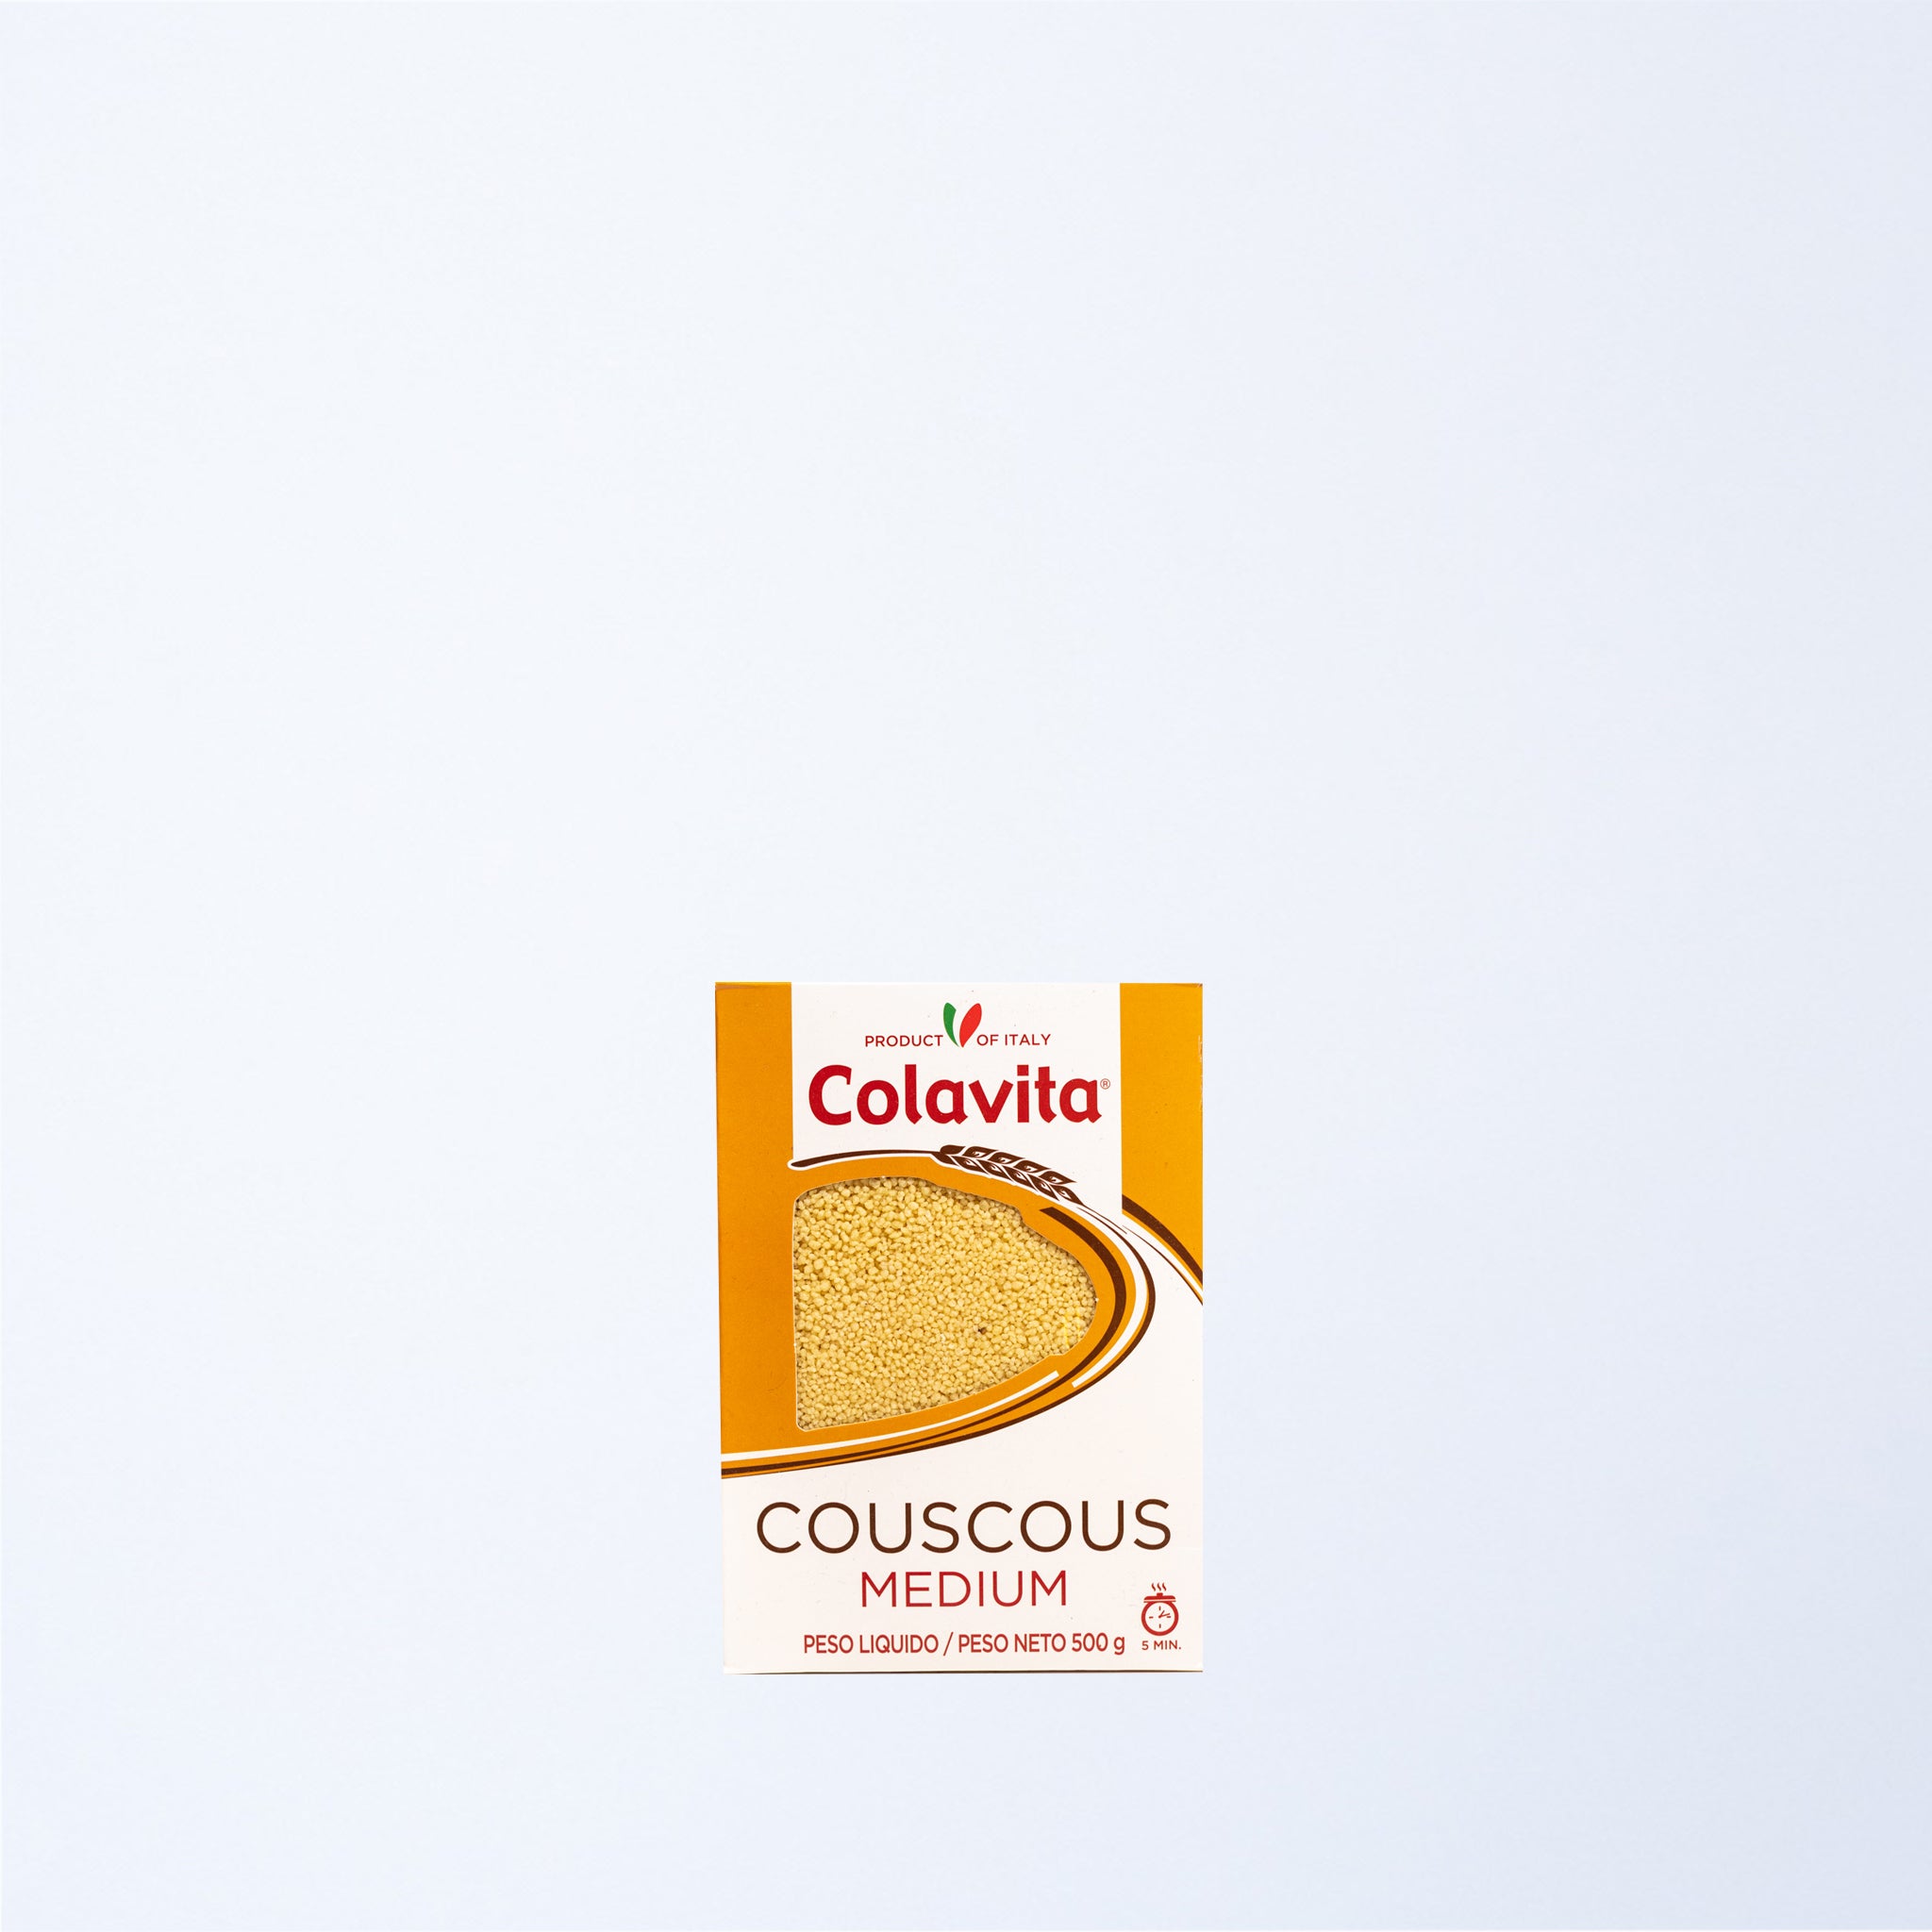 A box of Colavita Couscous 500g